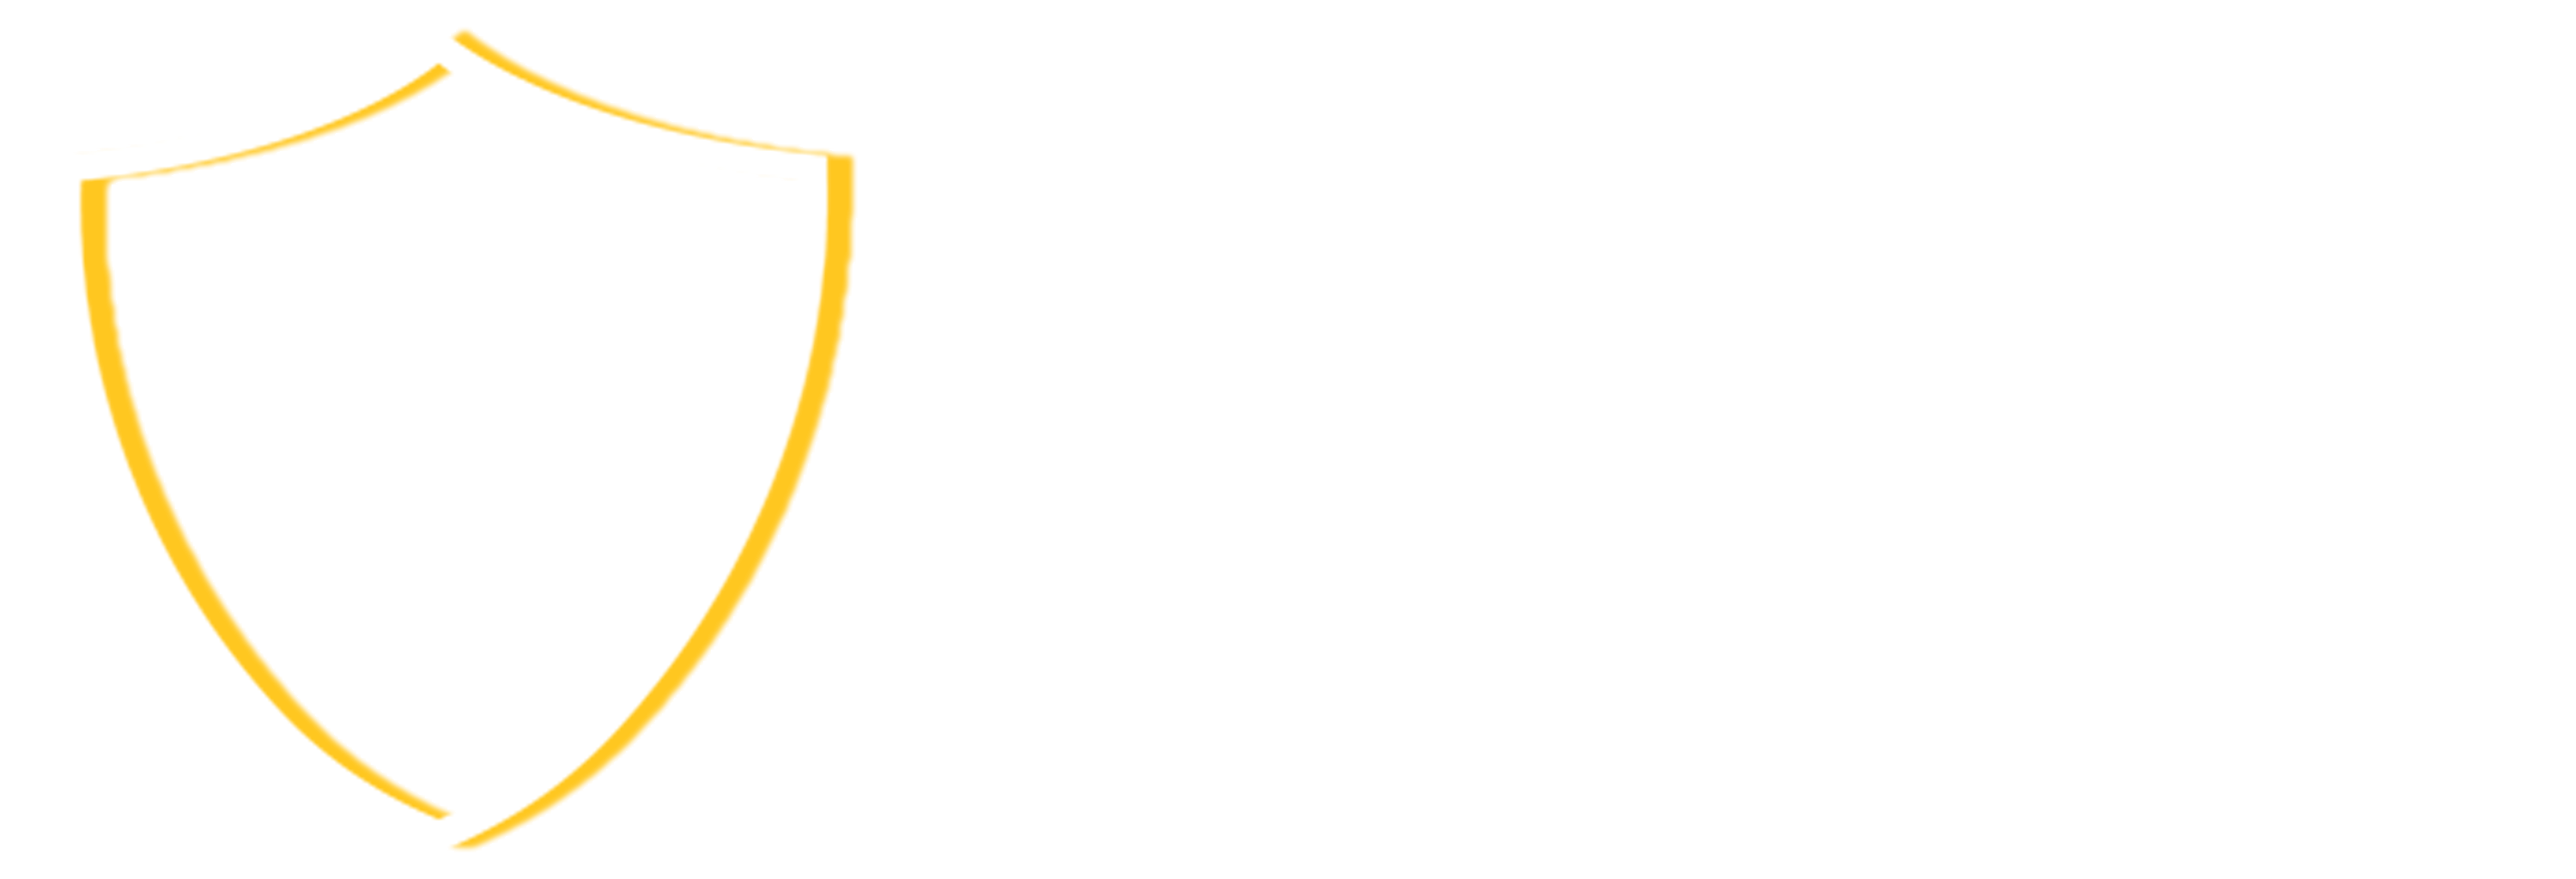 Security Institute of New Zealand